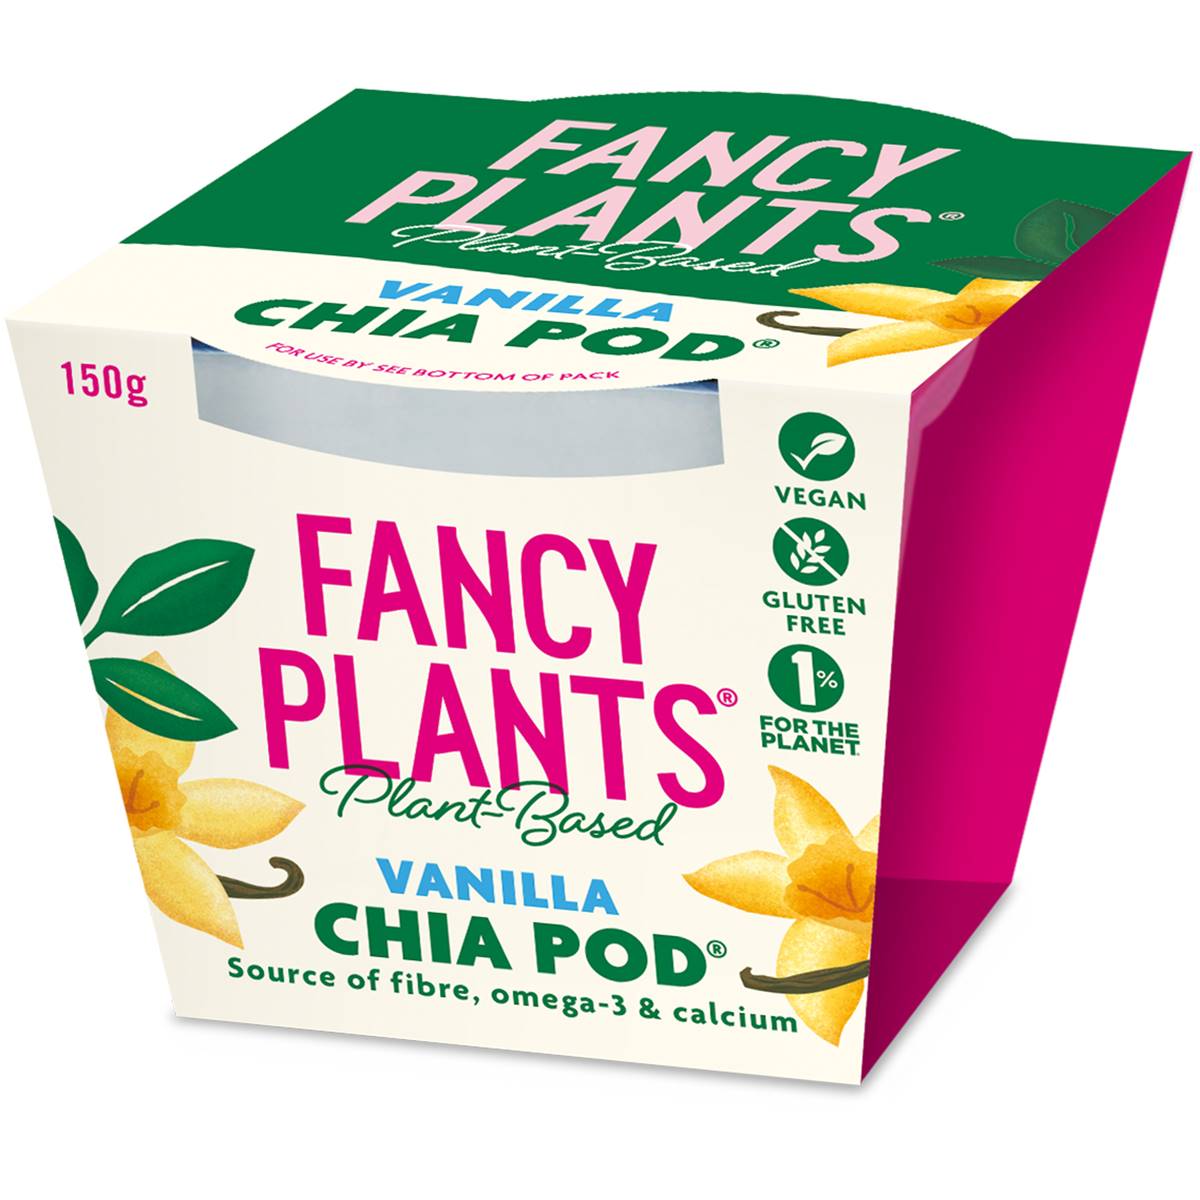 Calories in Fancy Plants Plant Based Vanilla Chia Pod